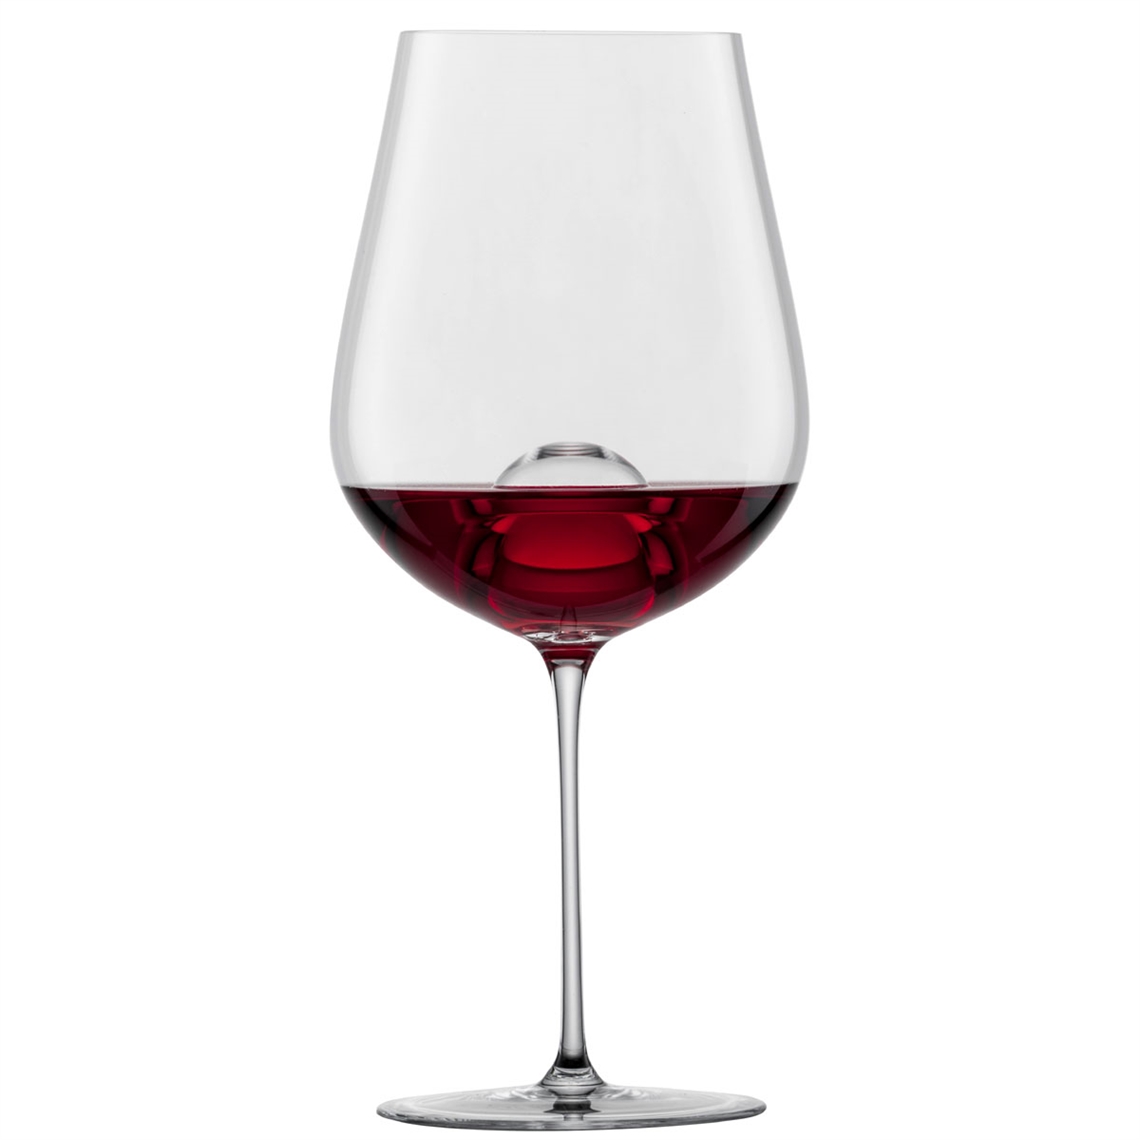 Zwiesel 1872 Air Sense Red Wine Glass - Set of 2